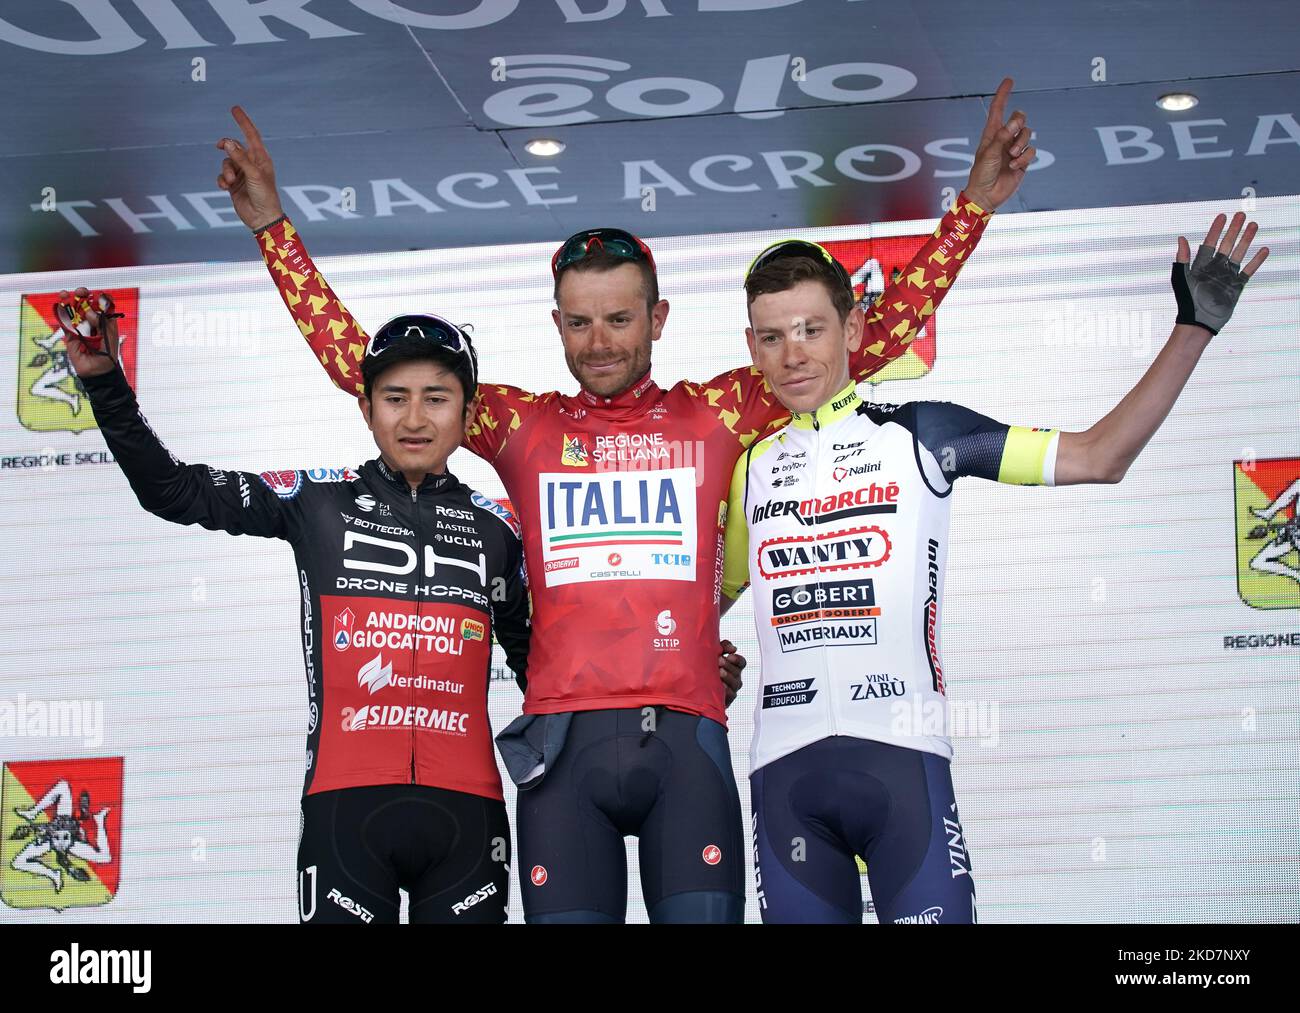 Le vainqueur de la quatrième étape et le Giro di Sicilia Damiano Caruso de l'équipe Nazionale Italiana célèbrent la victoire du Giro di Sicilia 2022. 15 avril 2022 Piano Provenzana, ETNA (CT) Italie (photo de Gabriele Maricchiolo/NurPhoto) Banque D'Images